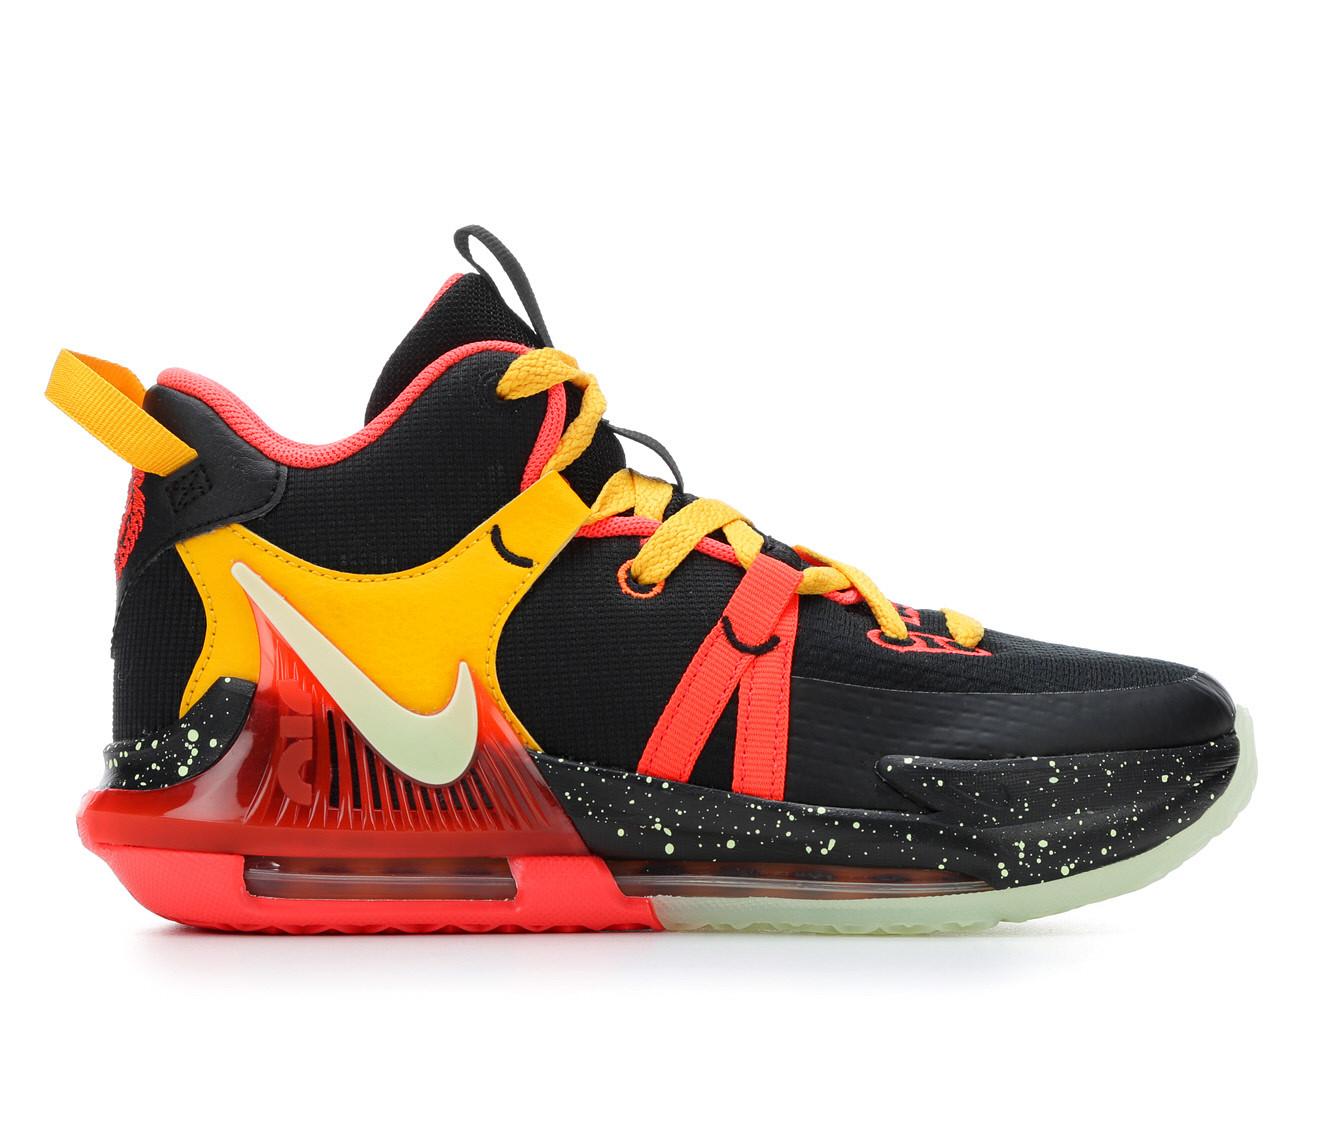 Nike Signature Basketball Shoes Featuring Lebron, Giannis...